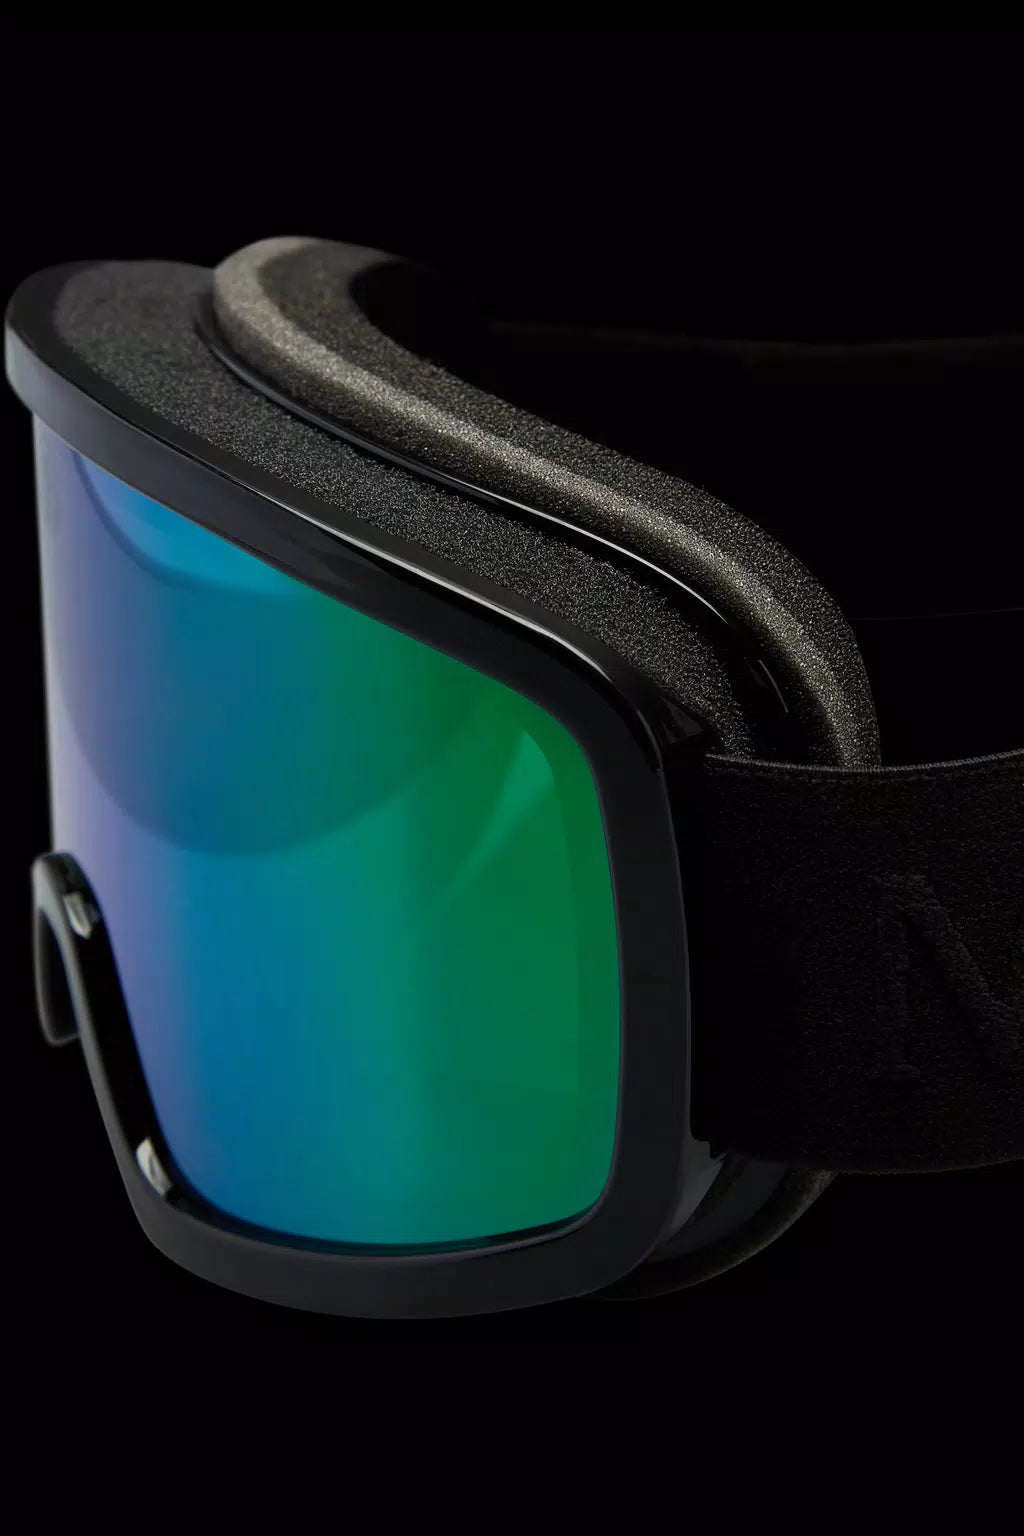 Terrabeam Ski Goggles - Shiny Black & Iridescent Aqua Green